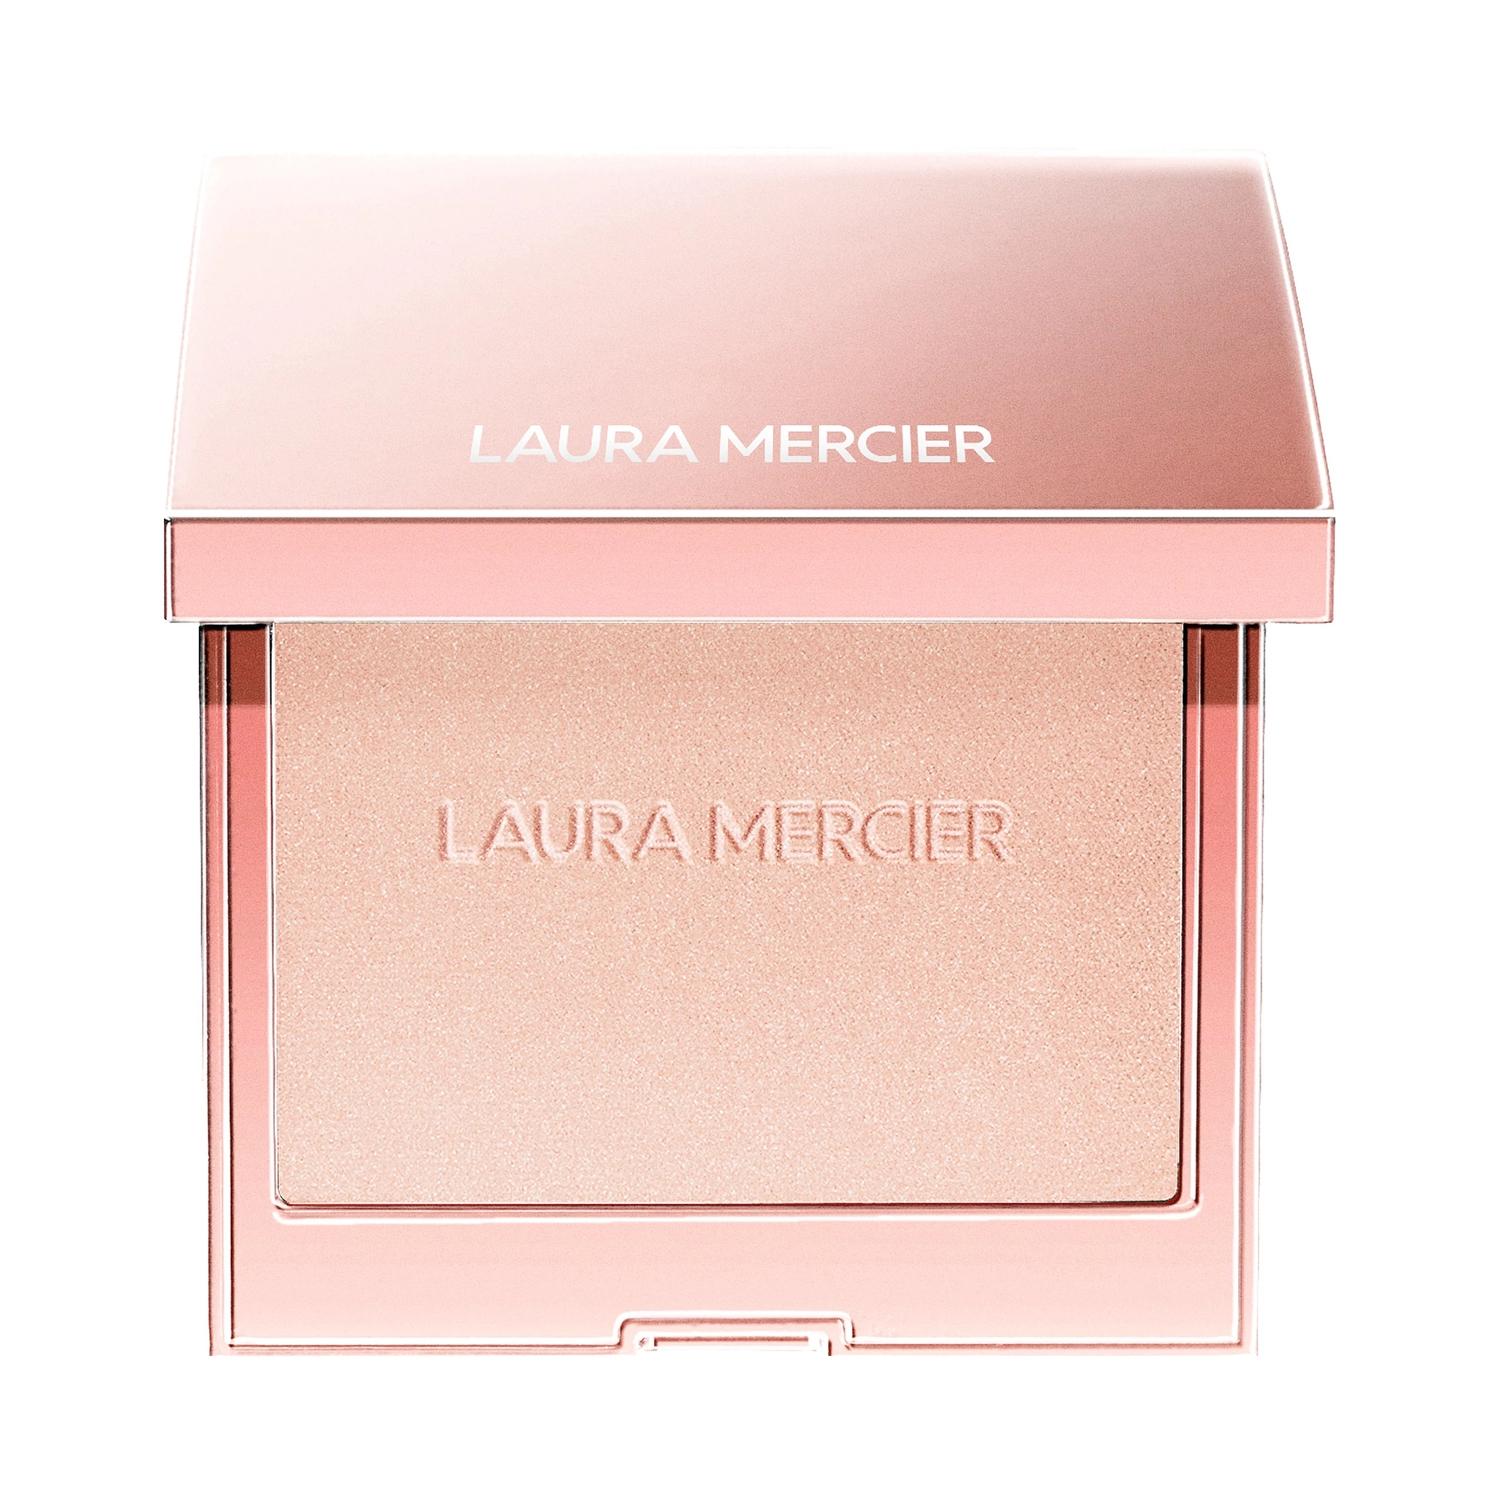 laura-mercier-rose-glow-highlighting-powder---beige-(6g)